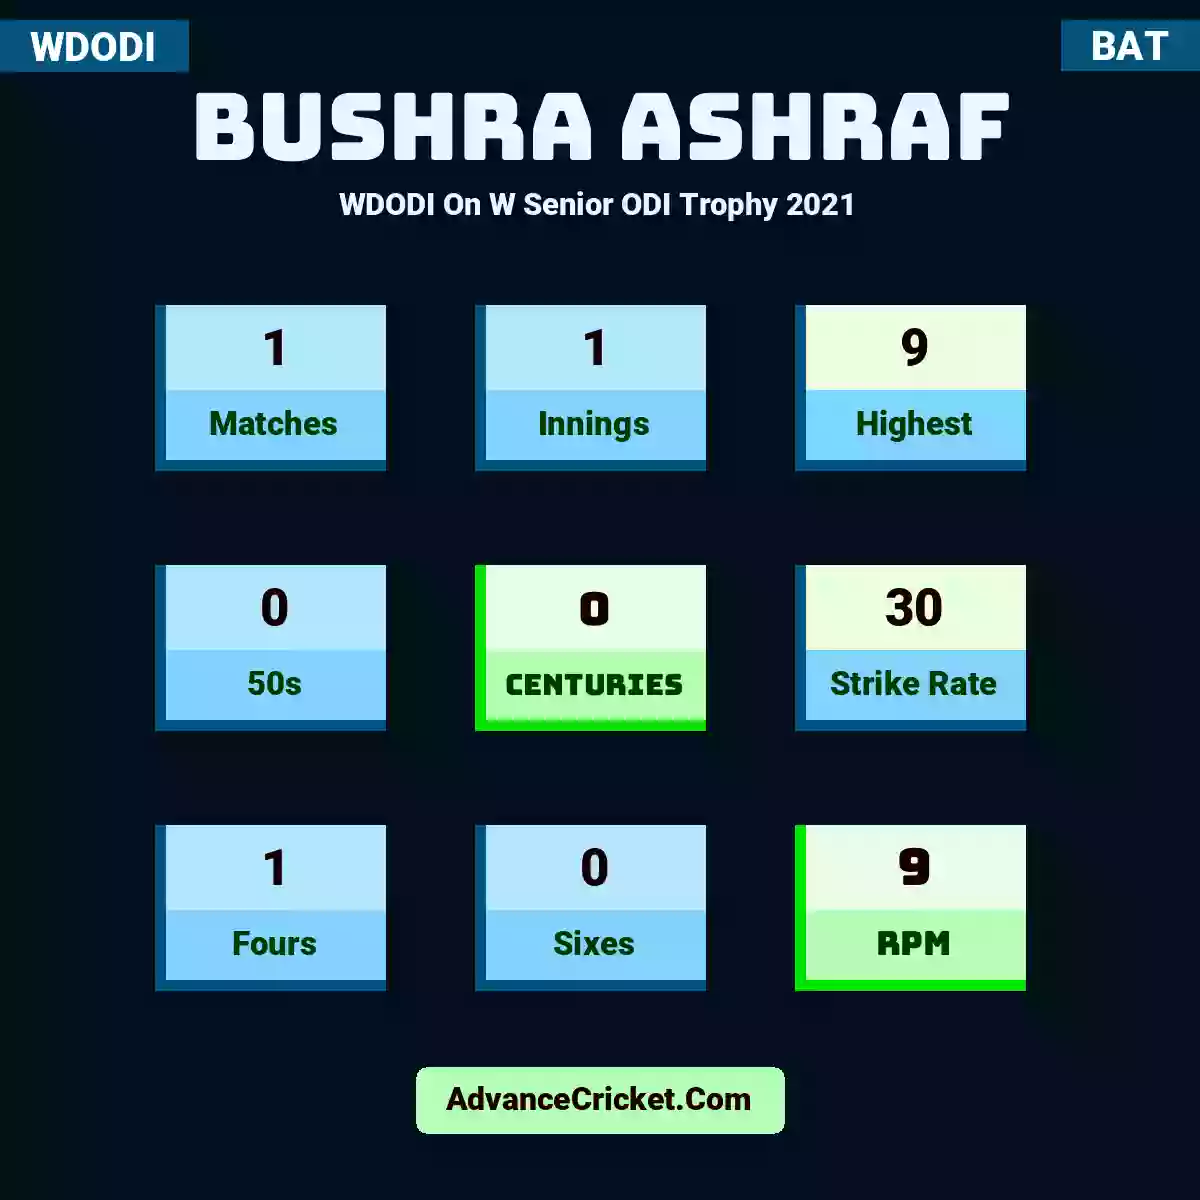 Bushra Ashraf WDODI  On W Senior ODI Trophy 2021, Bushra Ashraf played 1 matches, scored 9 runs as highest, 0 half-centuries, and 0 centuries, with a strike rate of 30. B.Ashraf hit 1 fours and 0 sixes, with an RPM of 9.